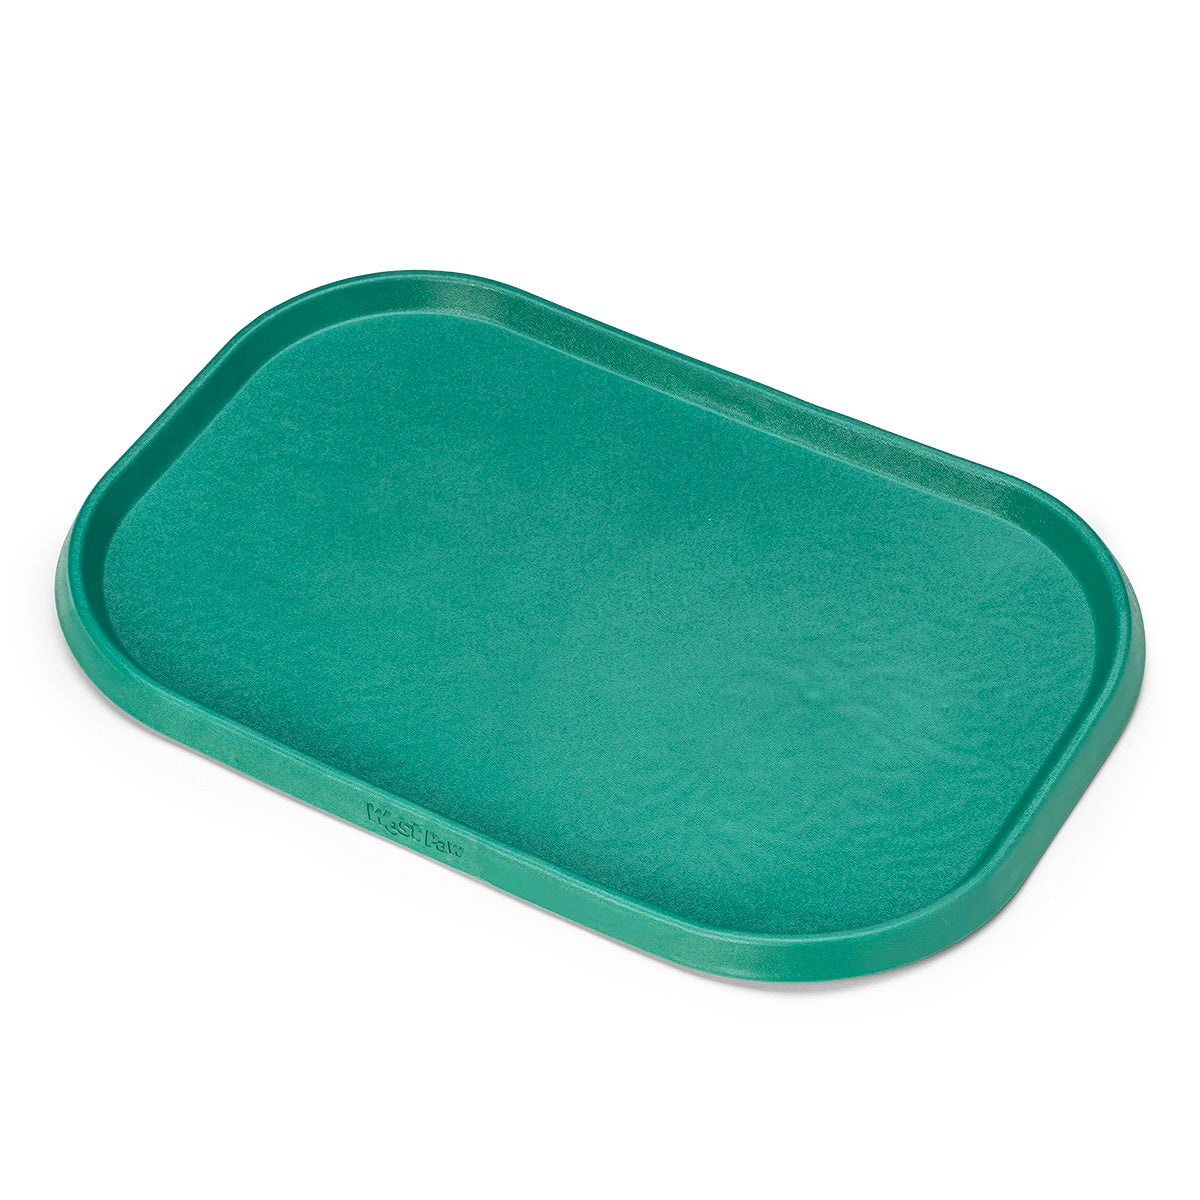 West Paw Seaflex Eco-Friendly No-Slip Dog Feeding Mat